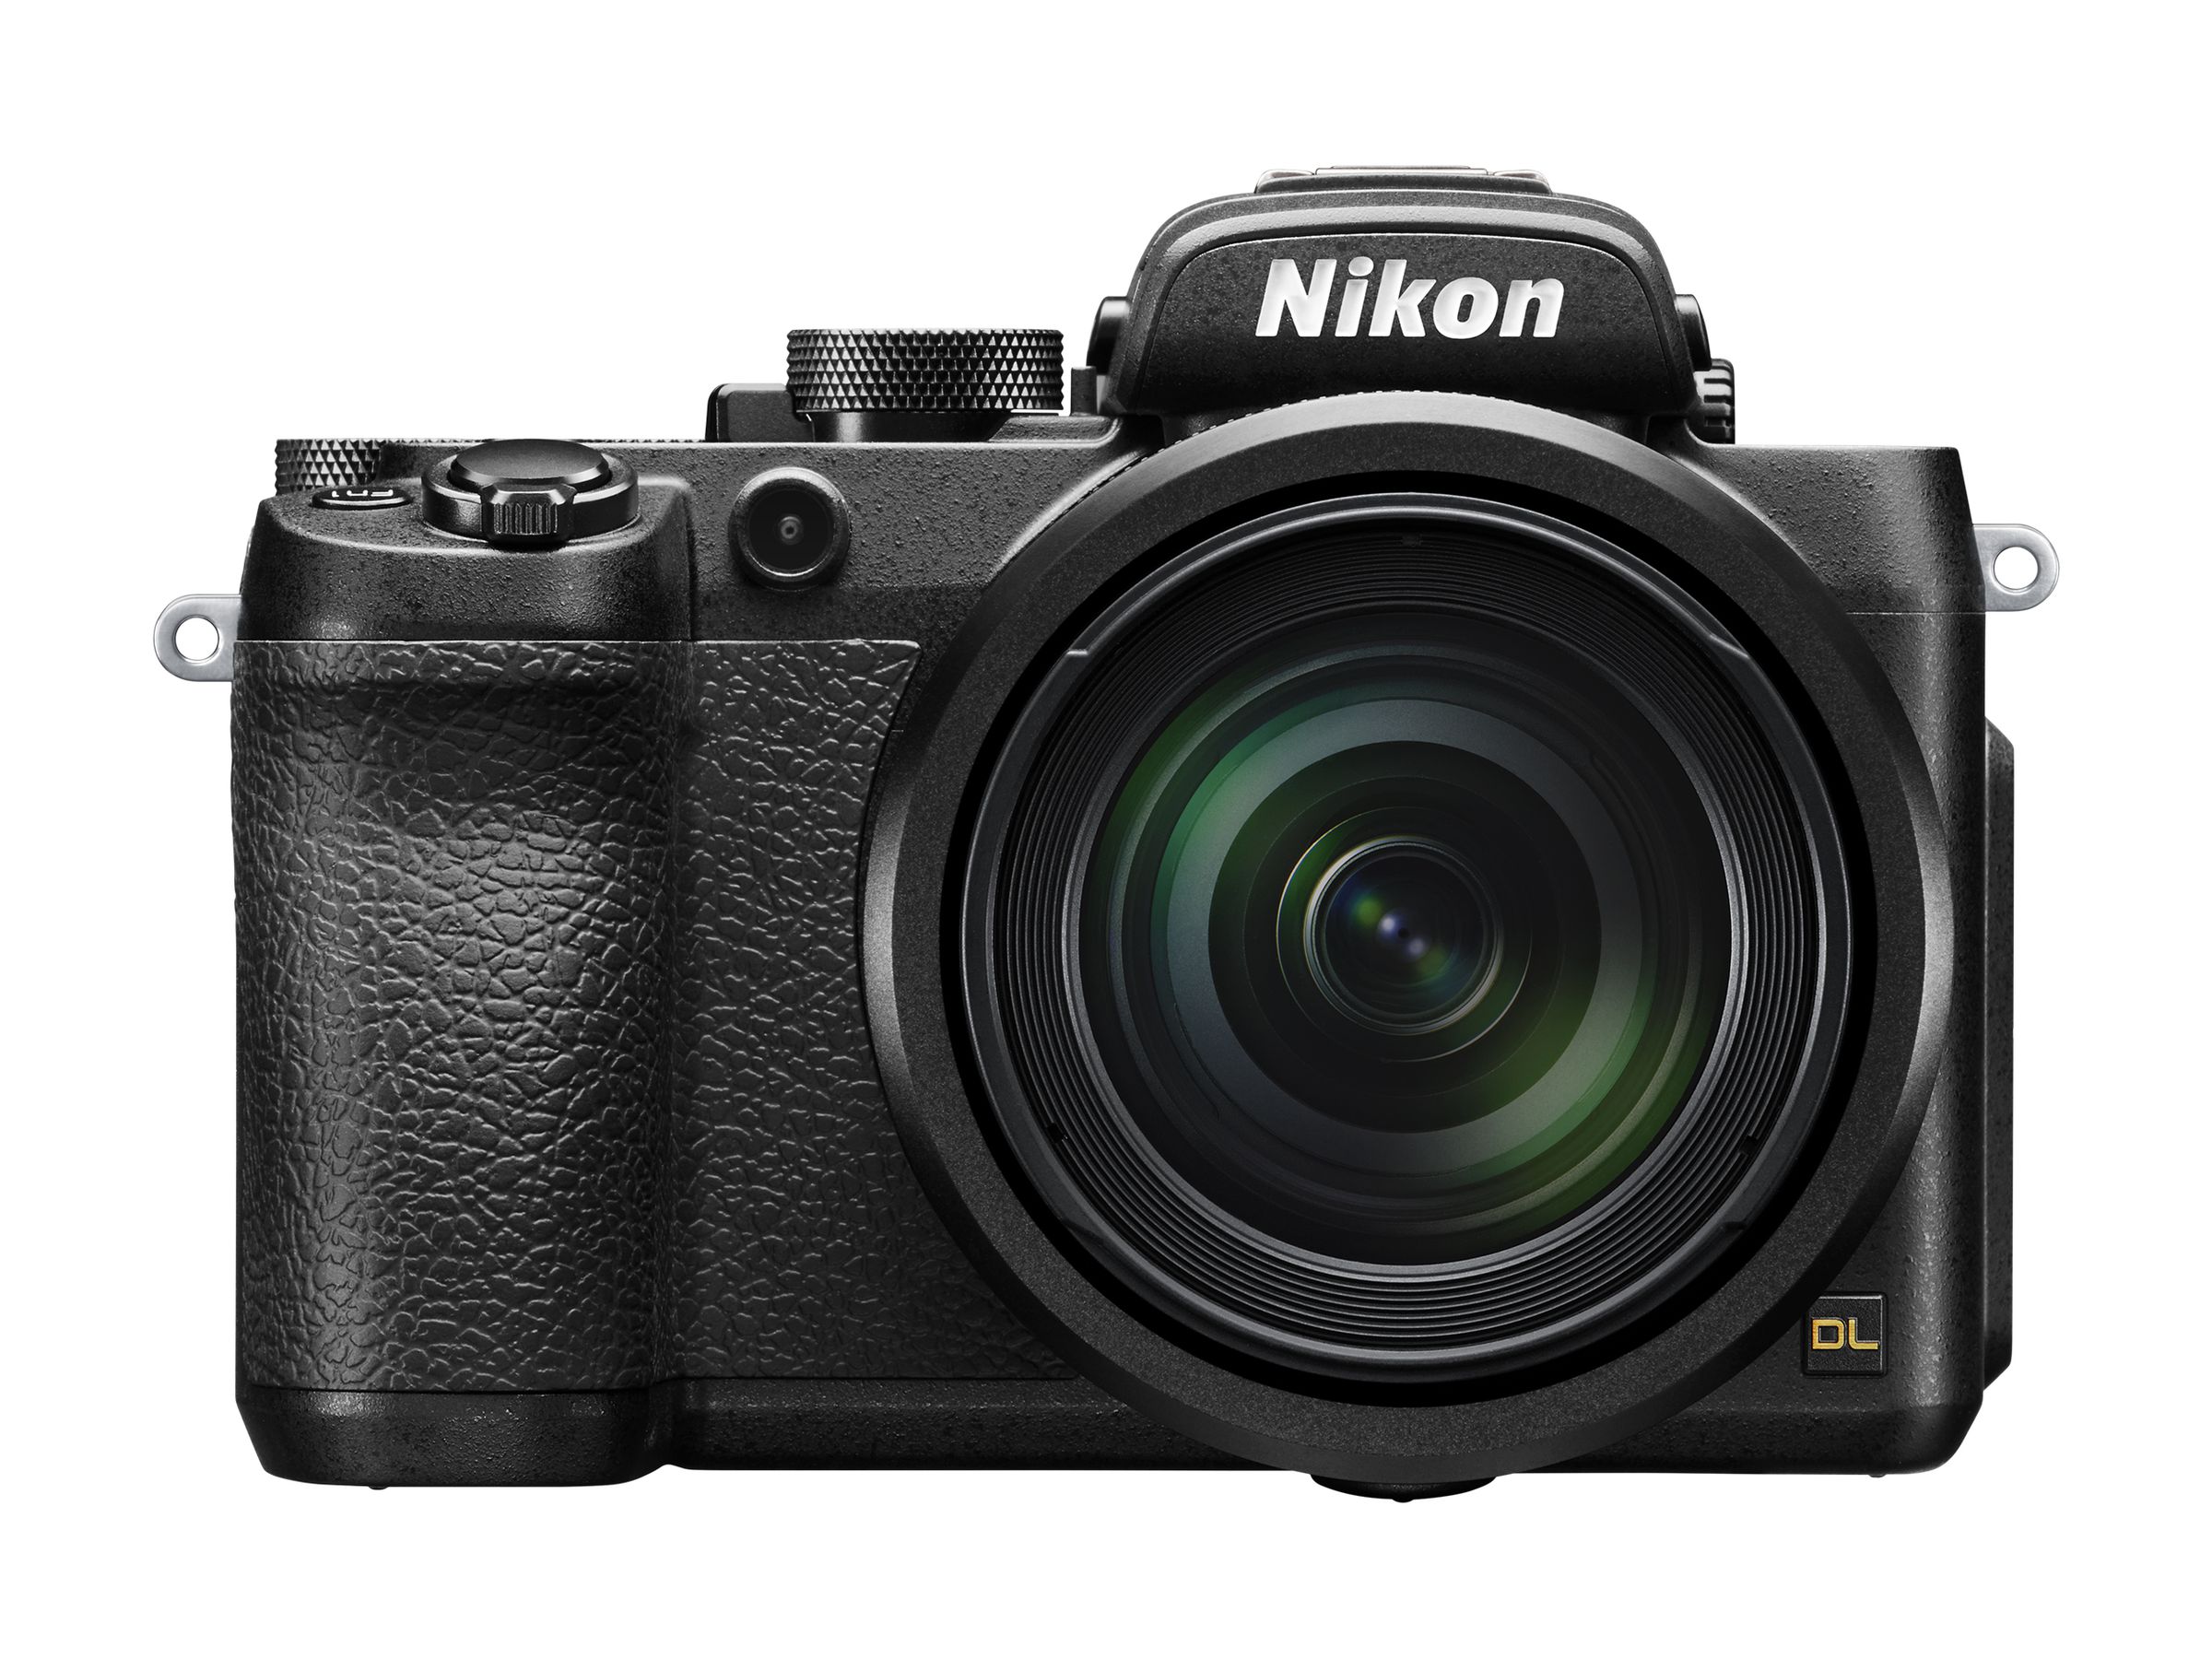 Nikon DL24-500 photos